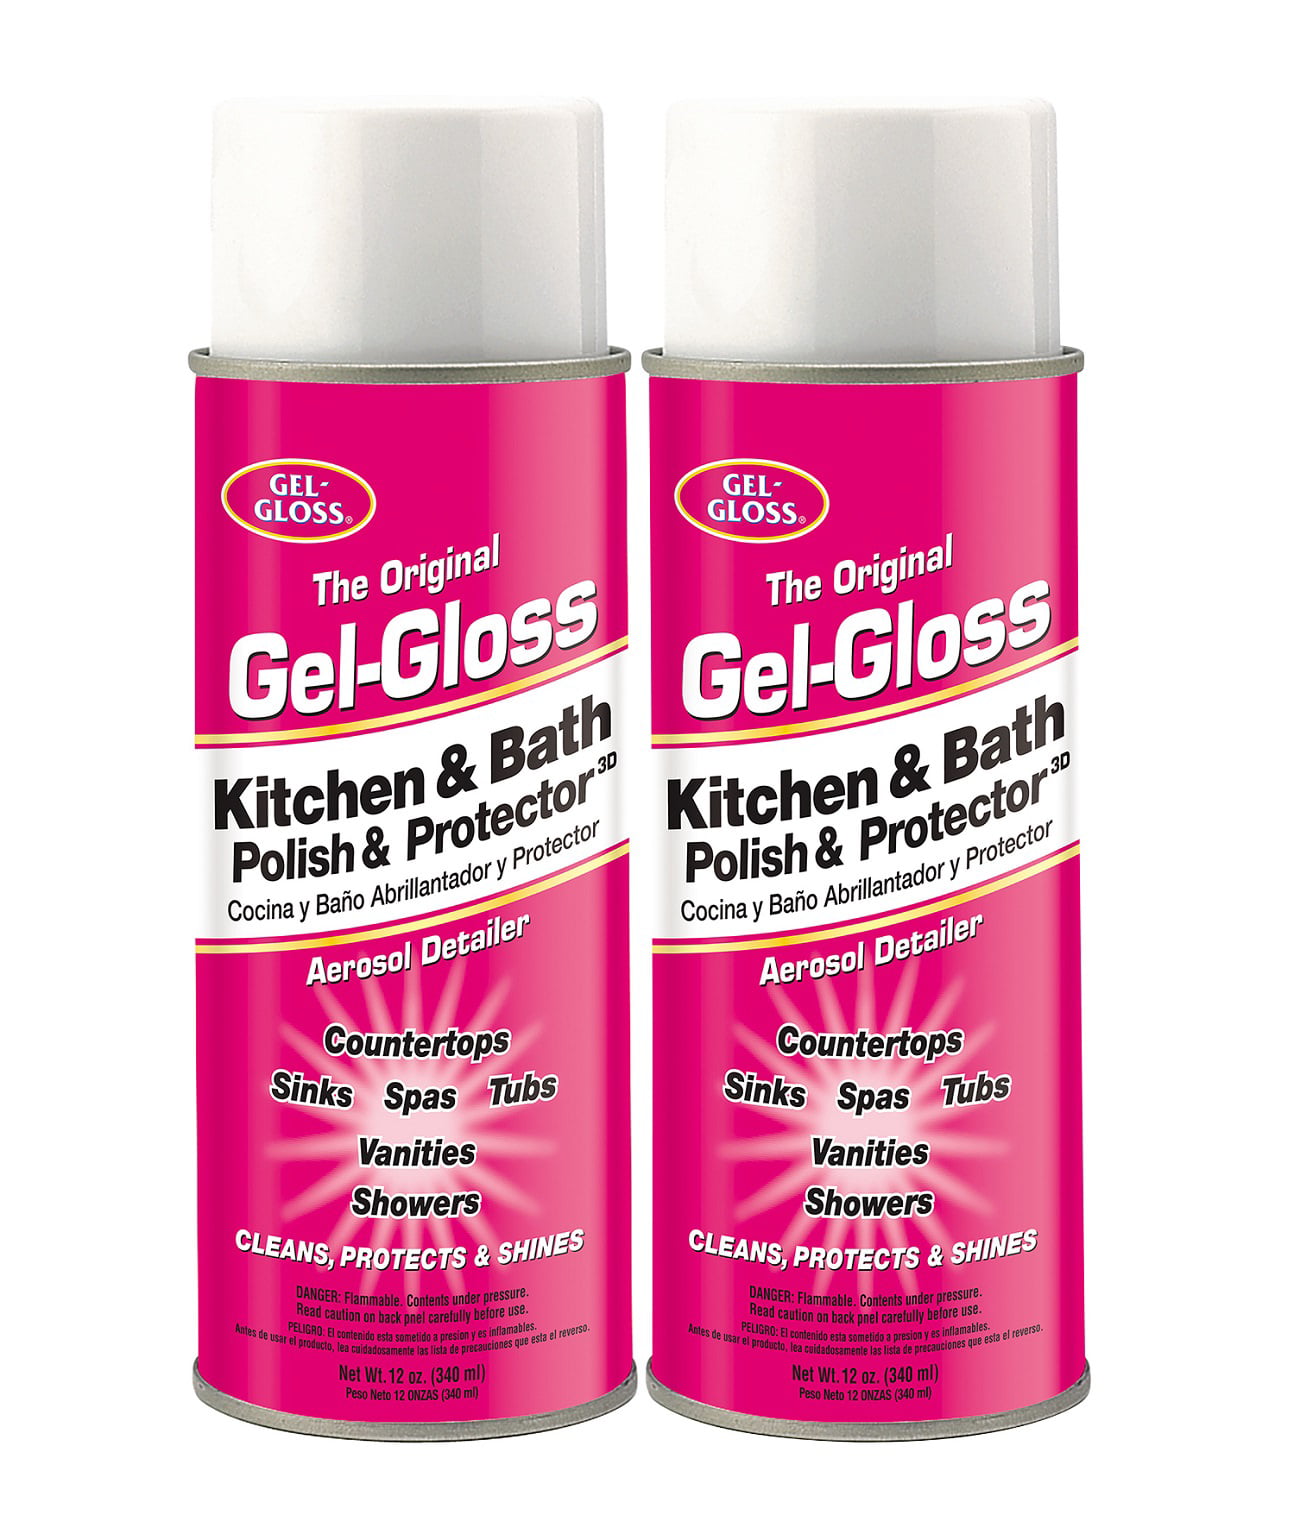  TR Industries GG-1 Gel-Gloss Kitchen and Bath Polish, 16 Fl. Oz  : Everything Else